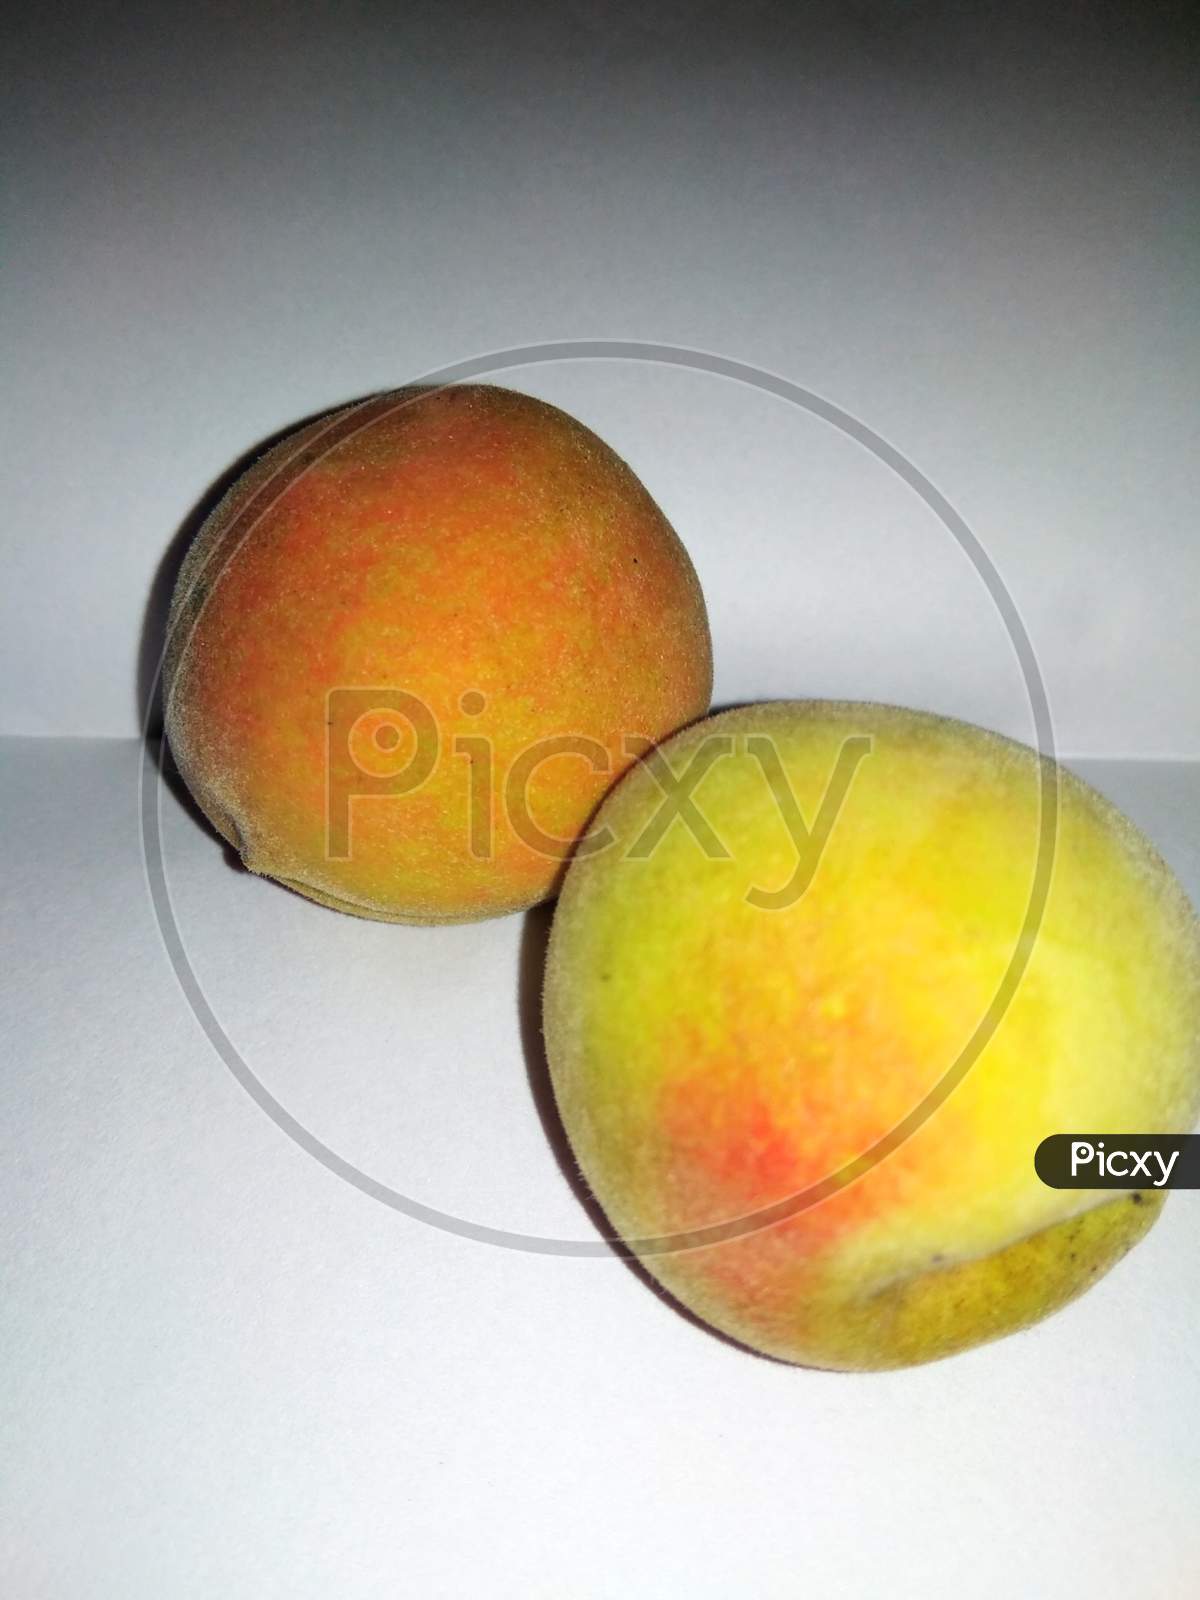 Peach fruit